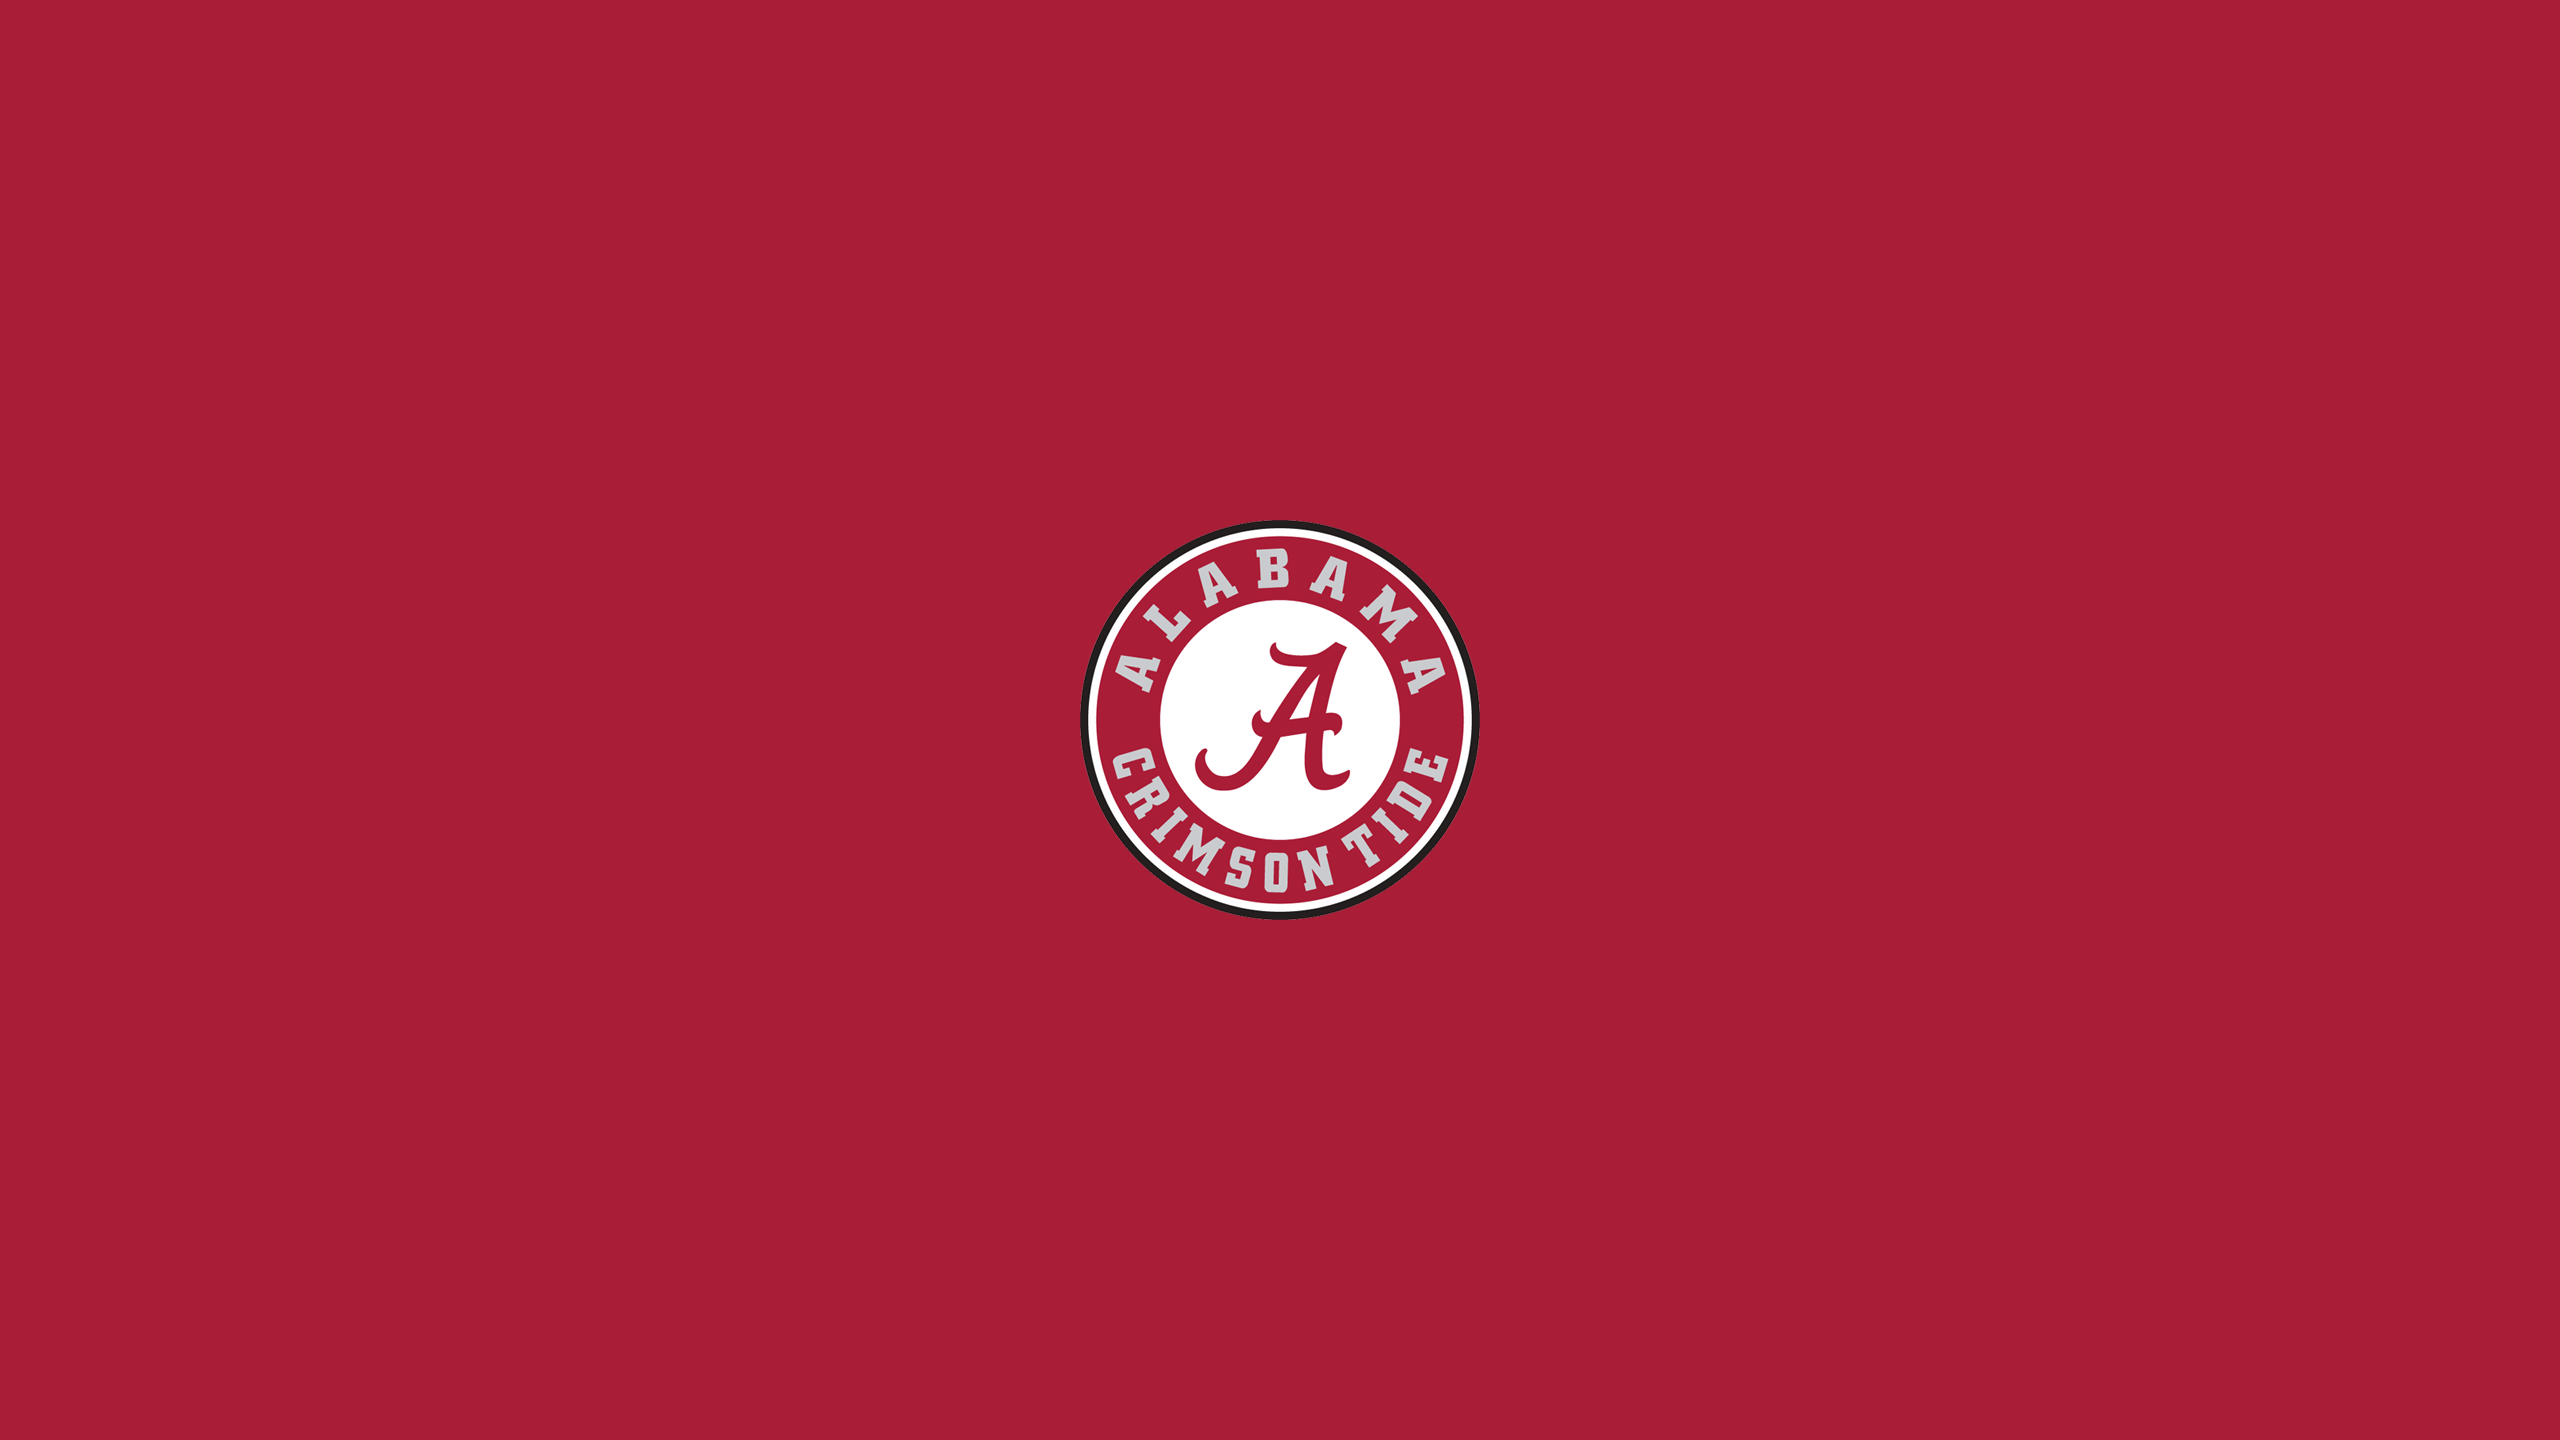 Alabama Crimson Tide Football - NCAAF - Square Bettor